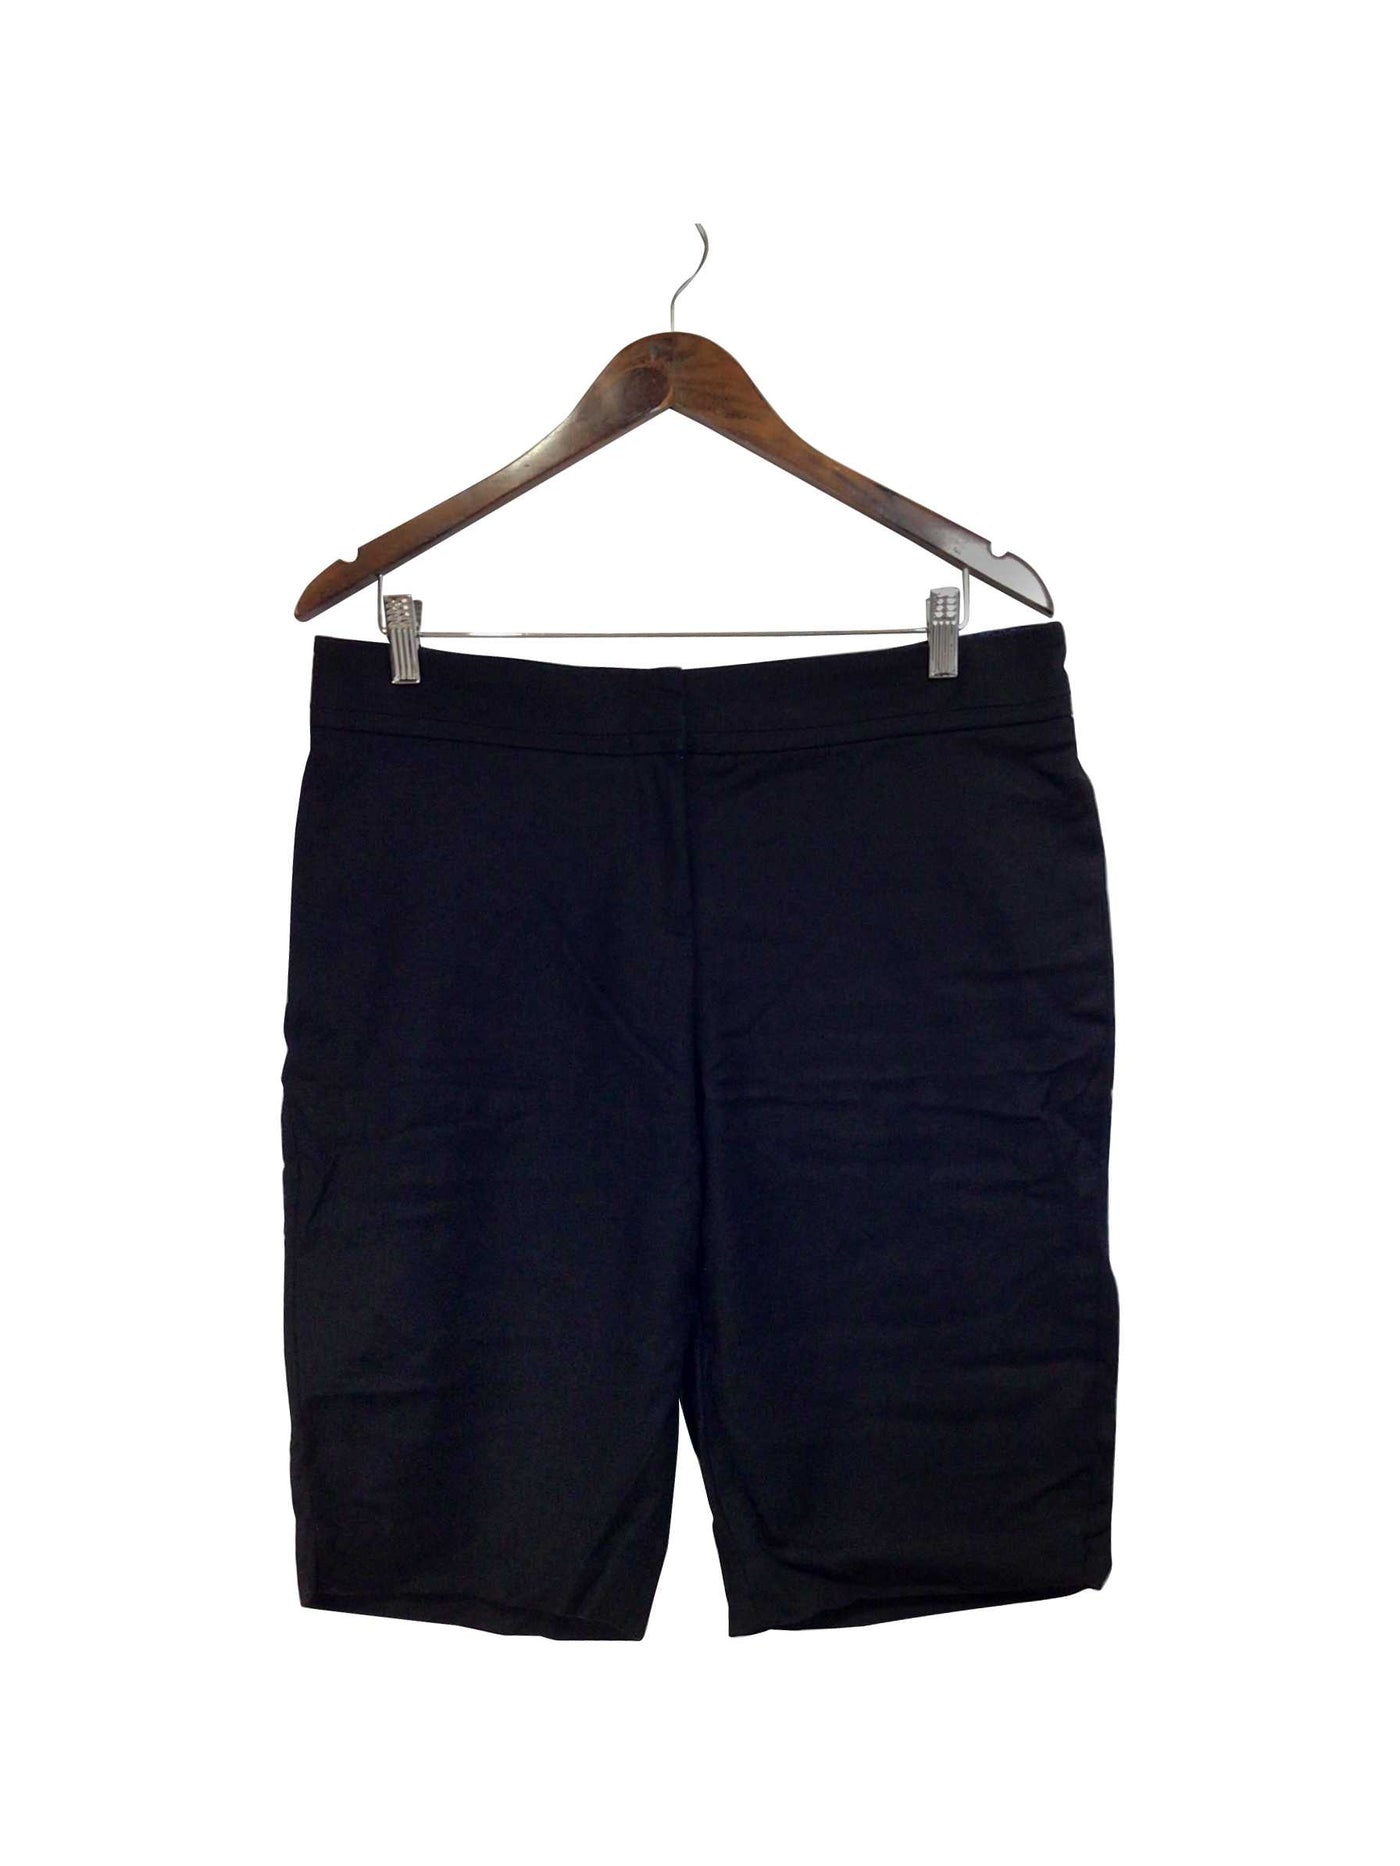 PETER NYGARD Regular fit Pant Shorts in Black  -  12  19.59 Koop